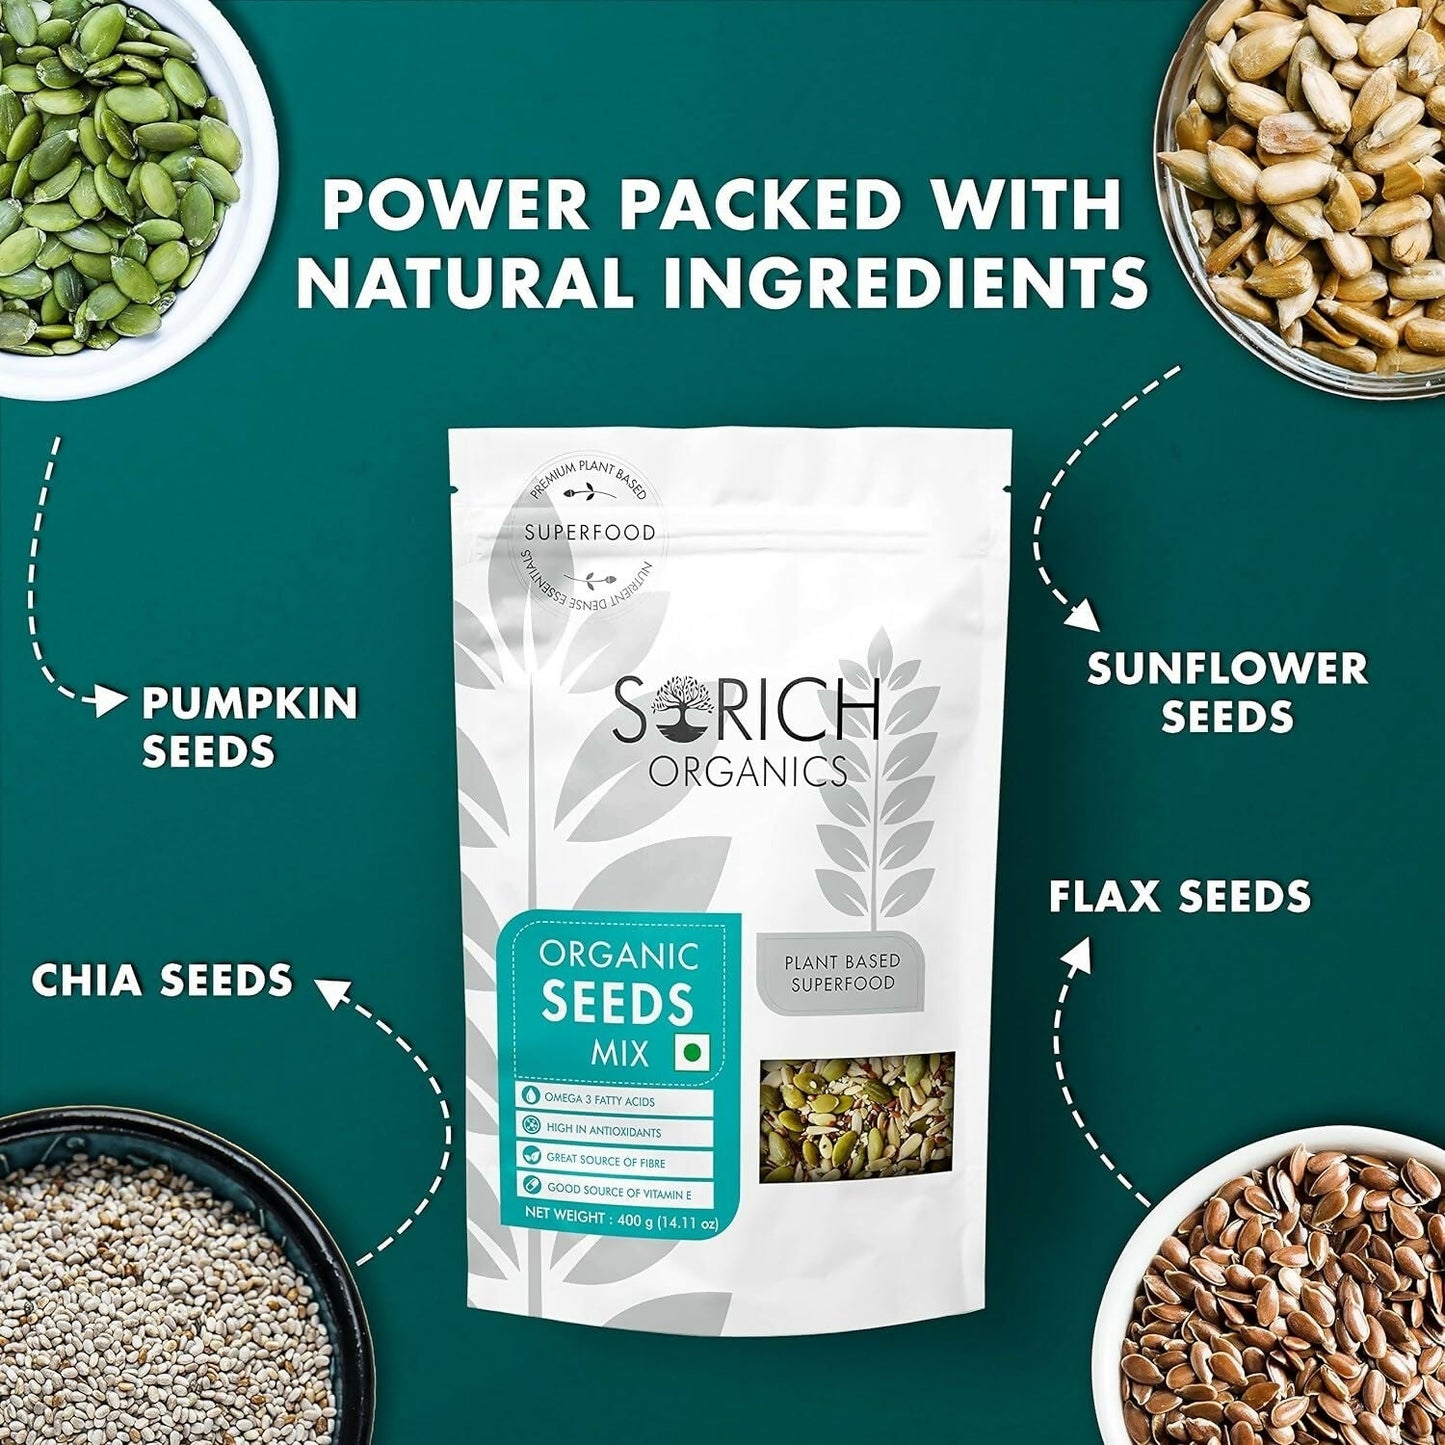 Sorich Organics 6-in-1 Seed Mix